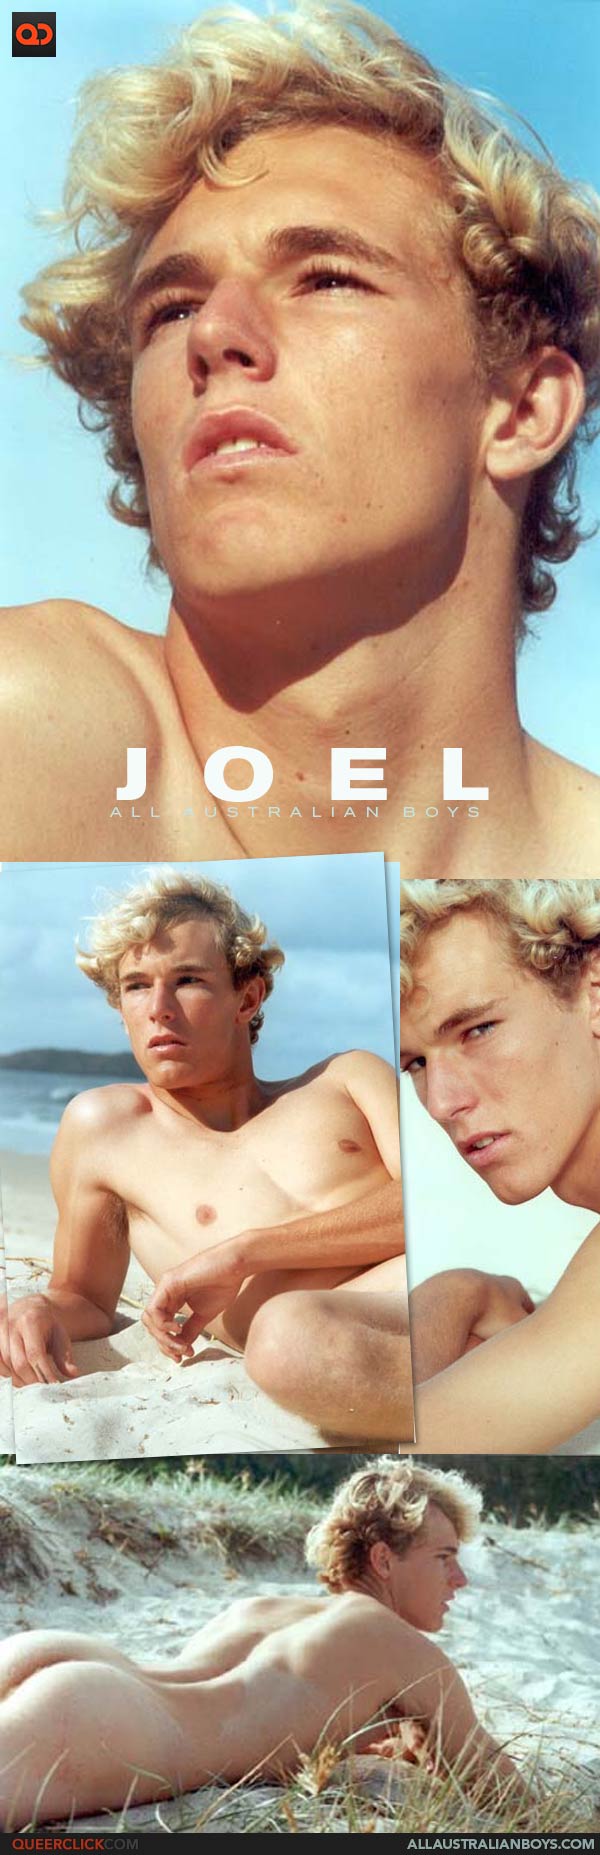 All Australian Boys: Joel - The First All Australian Boy